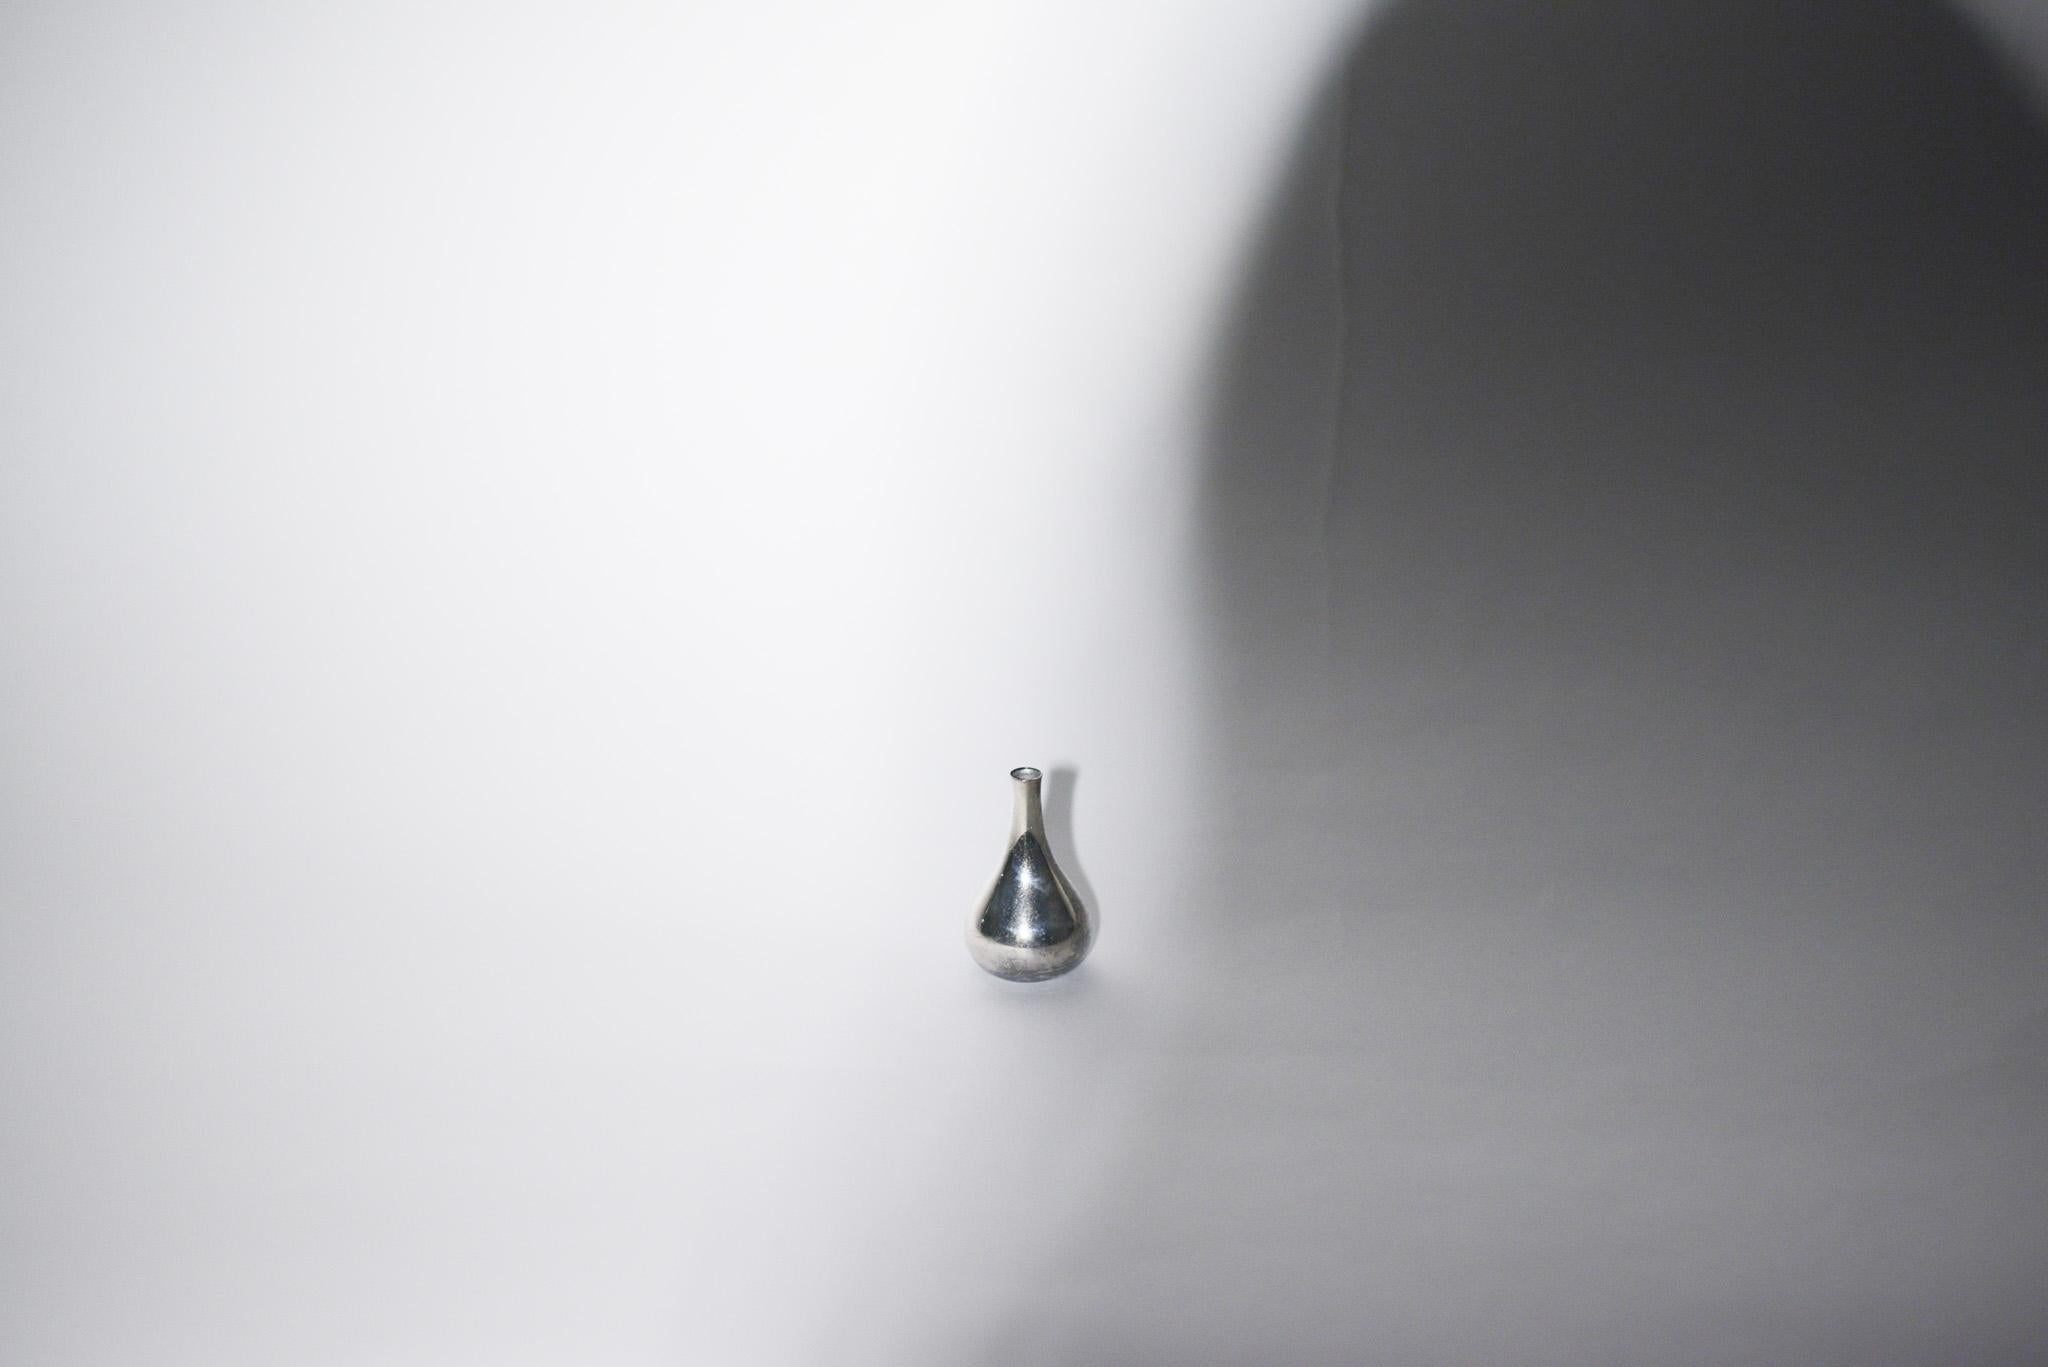 The candle holder's modern teardrop silouhette makes for a sculptural tabletop piece. Designed by Danish sculptor and designer Jens Quistgaard.